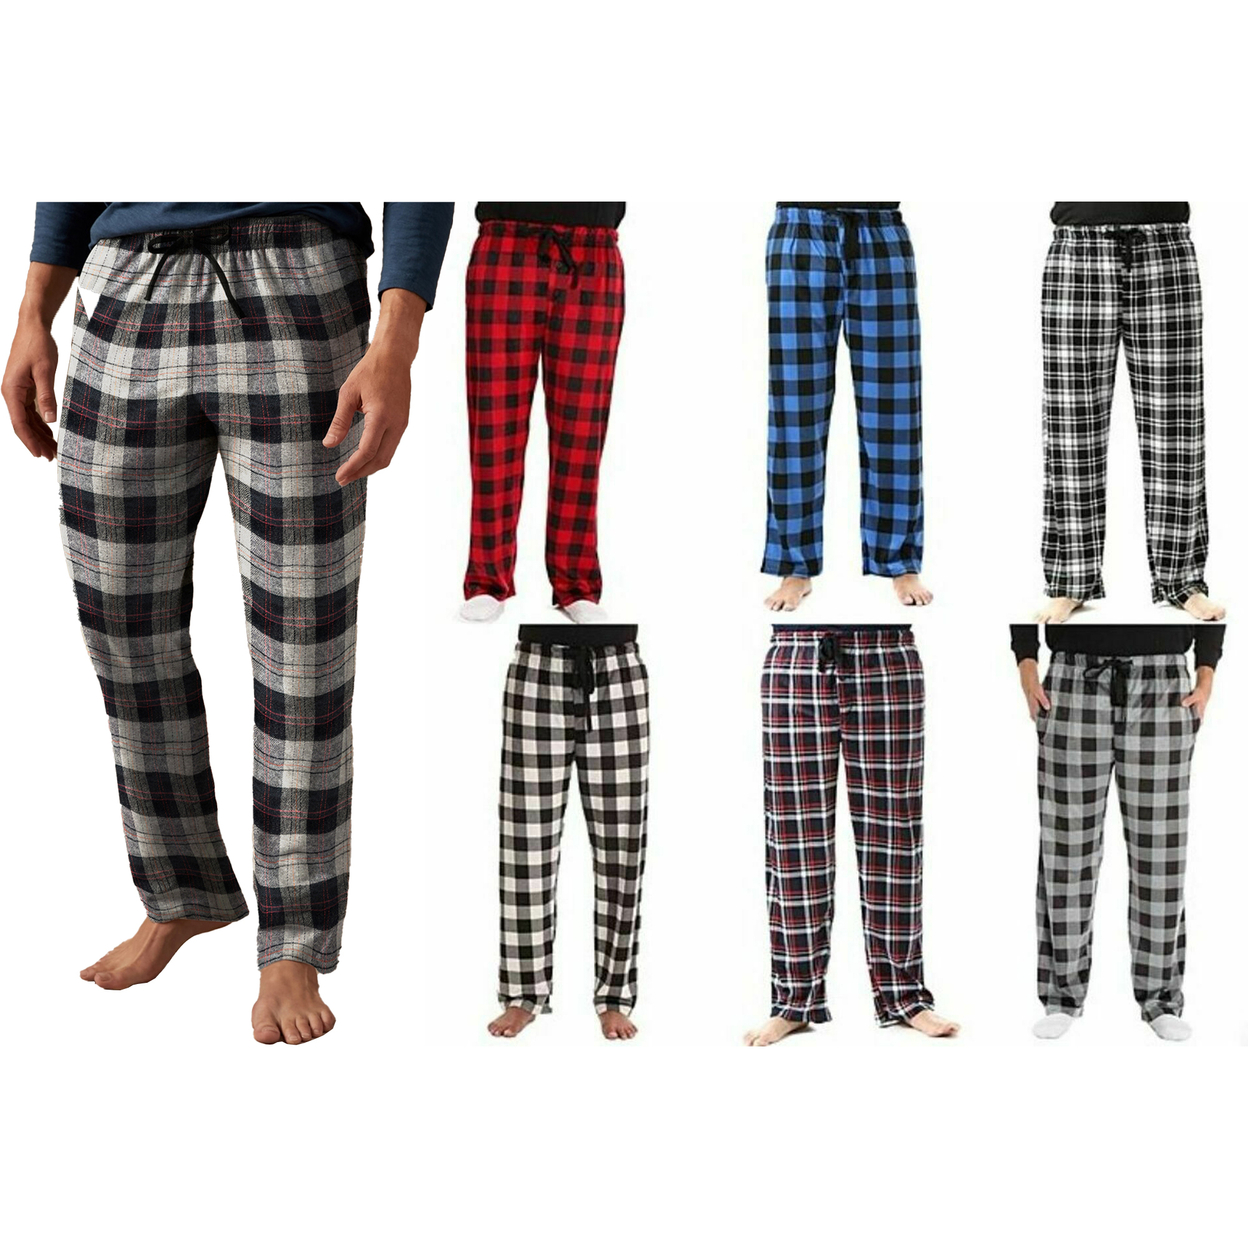 Multi-Pack: Men's Ultra Soft Cozy Flannel Fleece Plaid Pajama Sleep Bottom Lounge Pants - 3-pack, Small